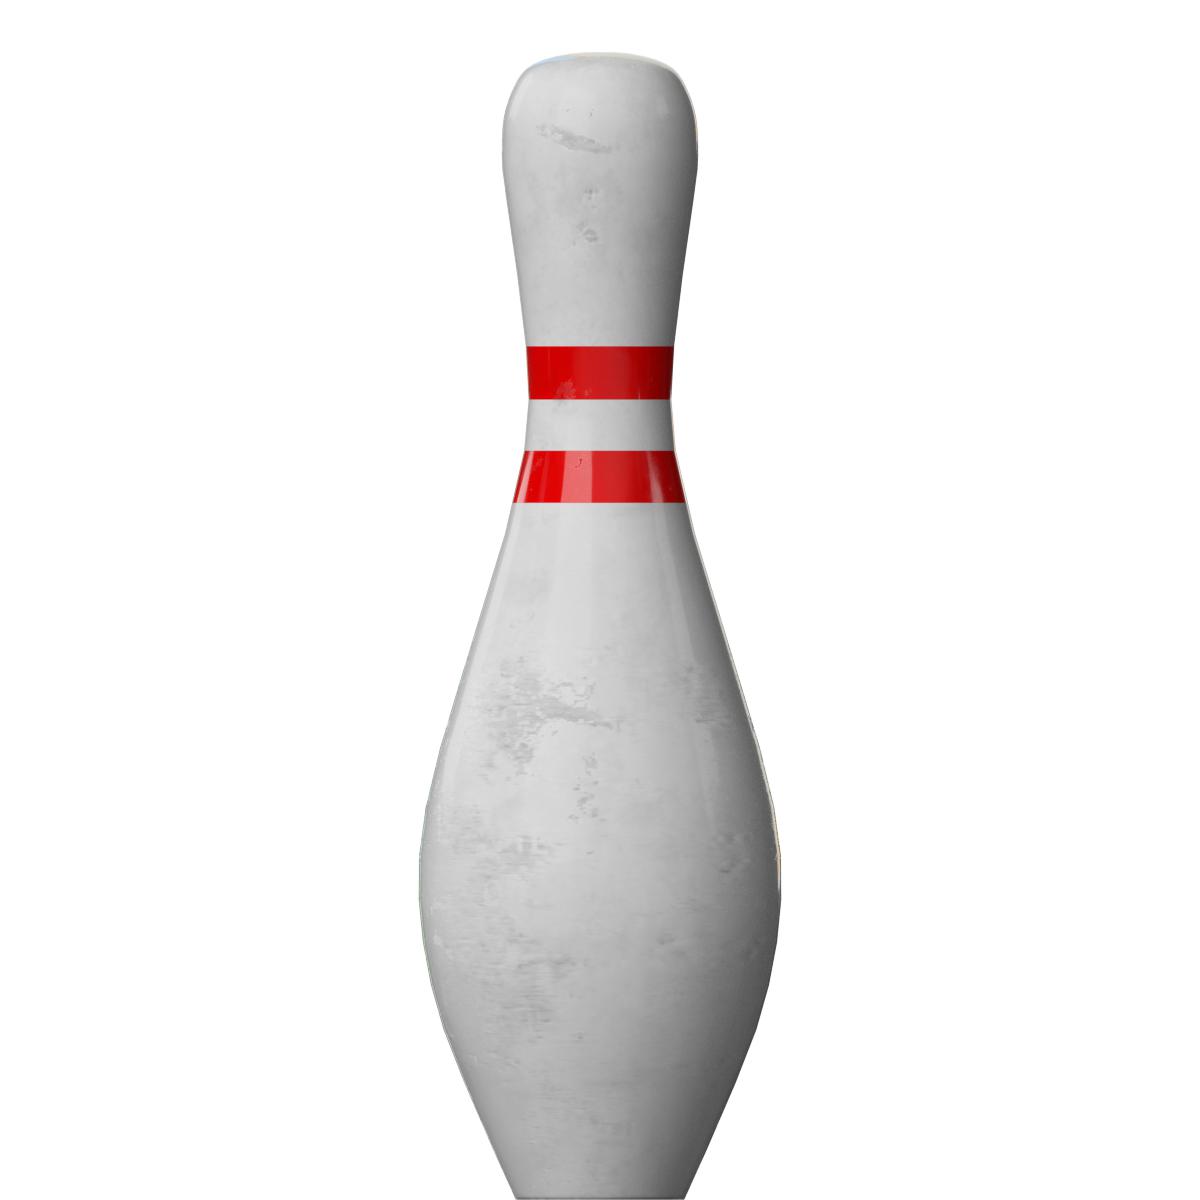 5 pin bowling